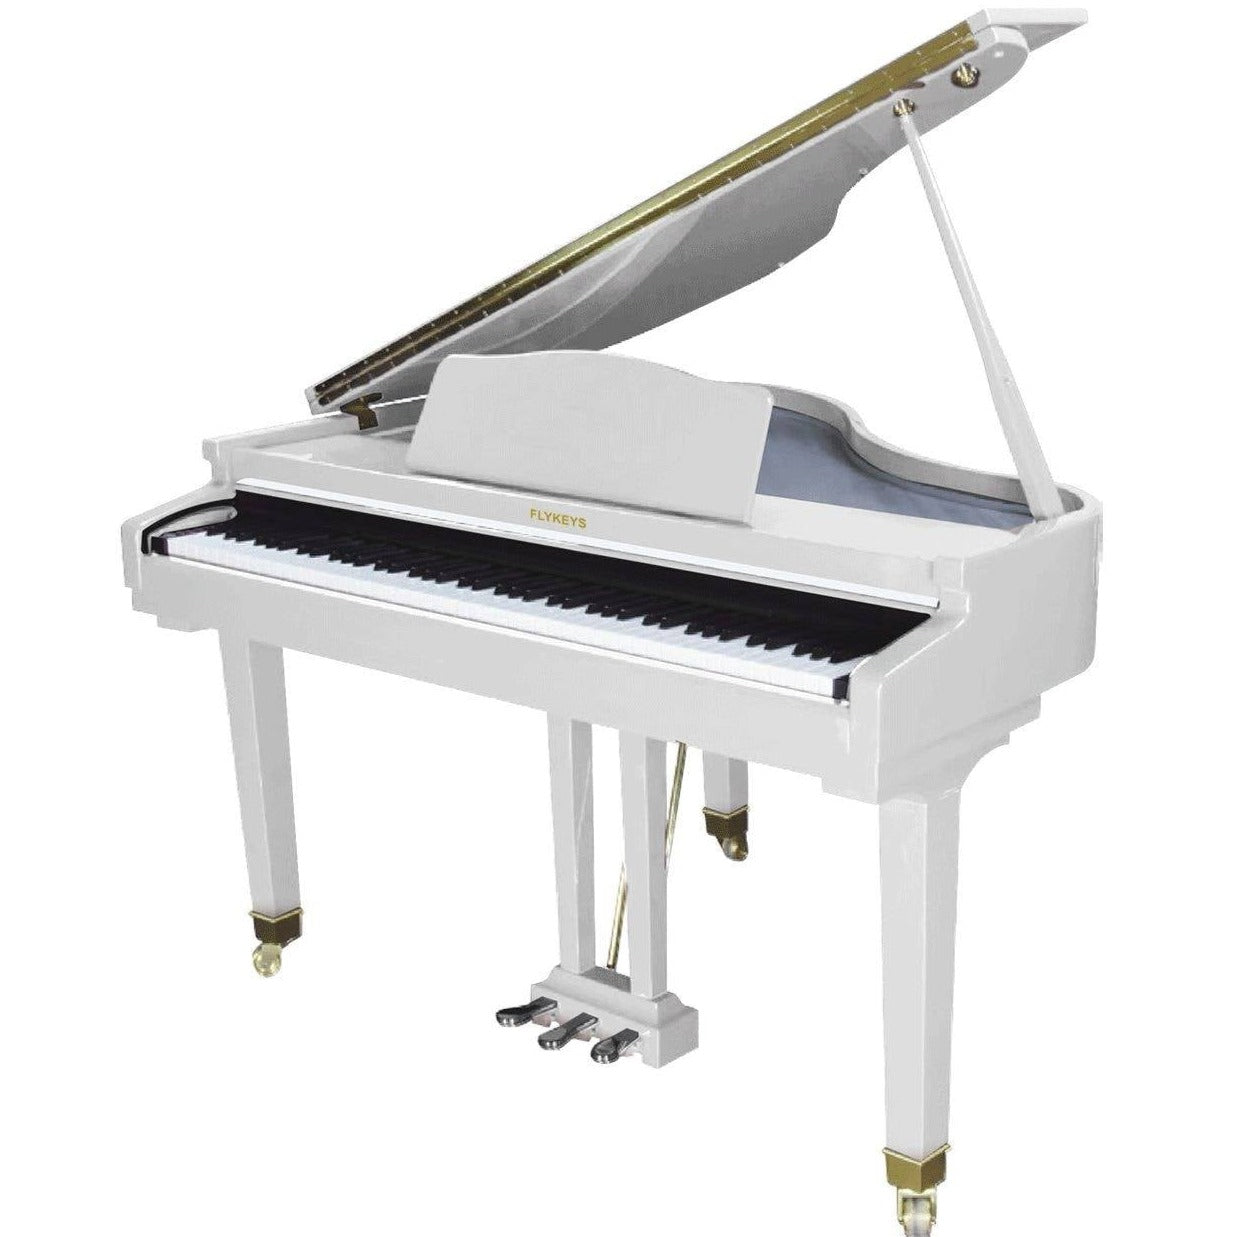 Flykeys FGP110 88-Keys Grand Piano - White